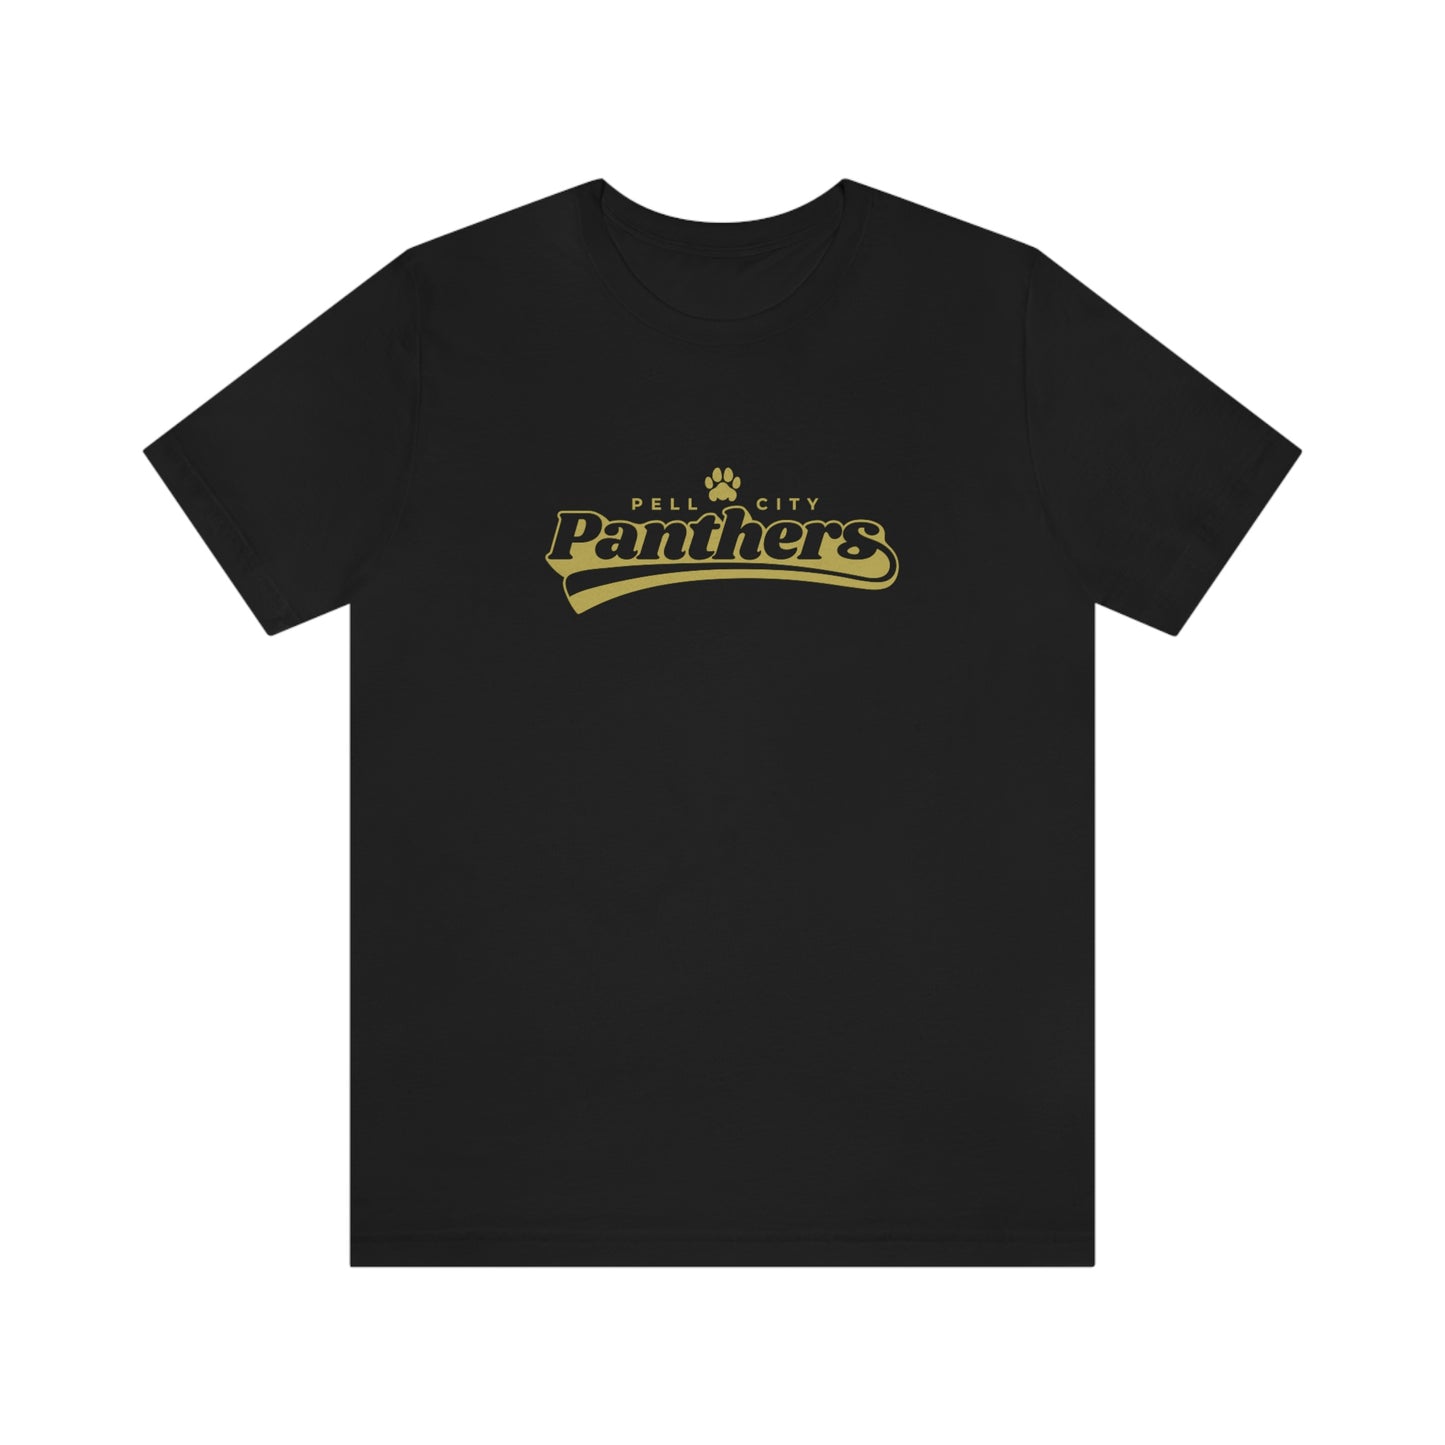 Pell City Panthers - T-shirt (Black)